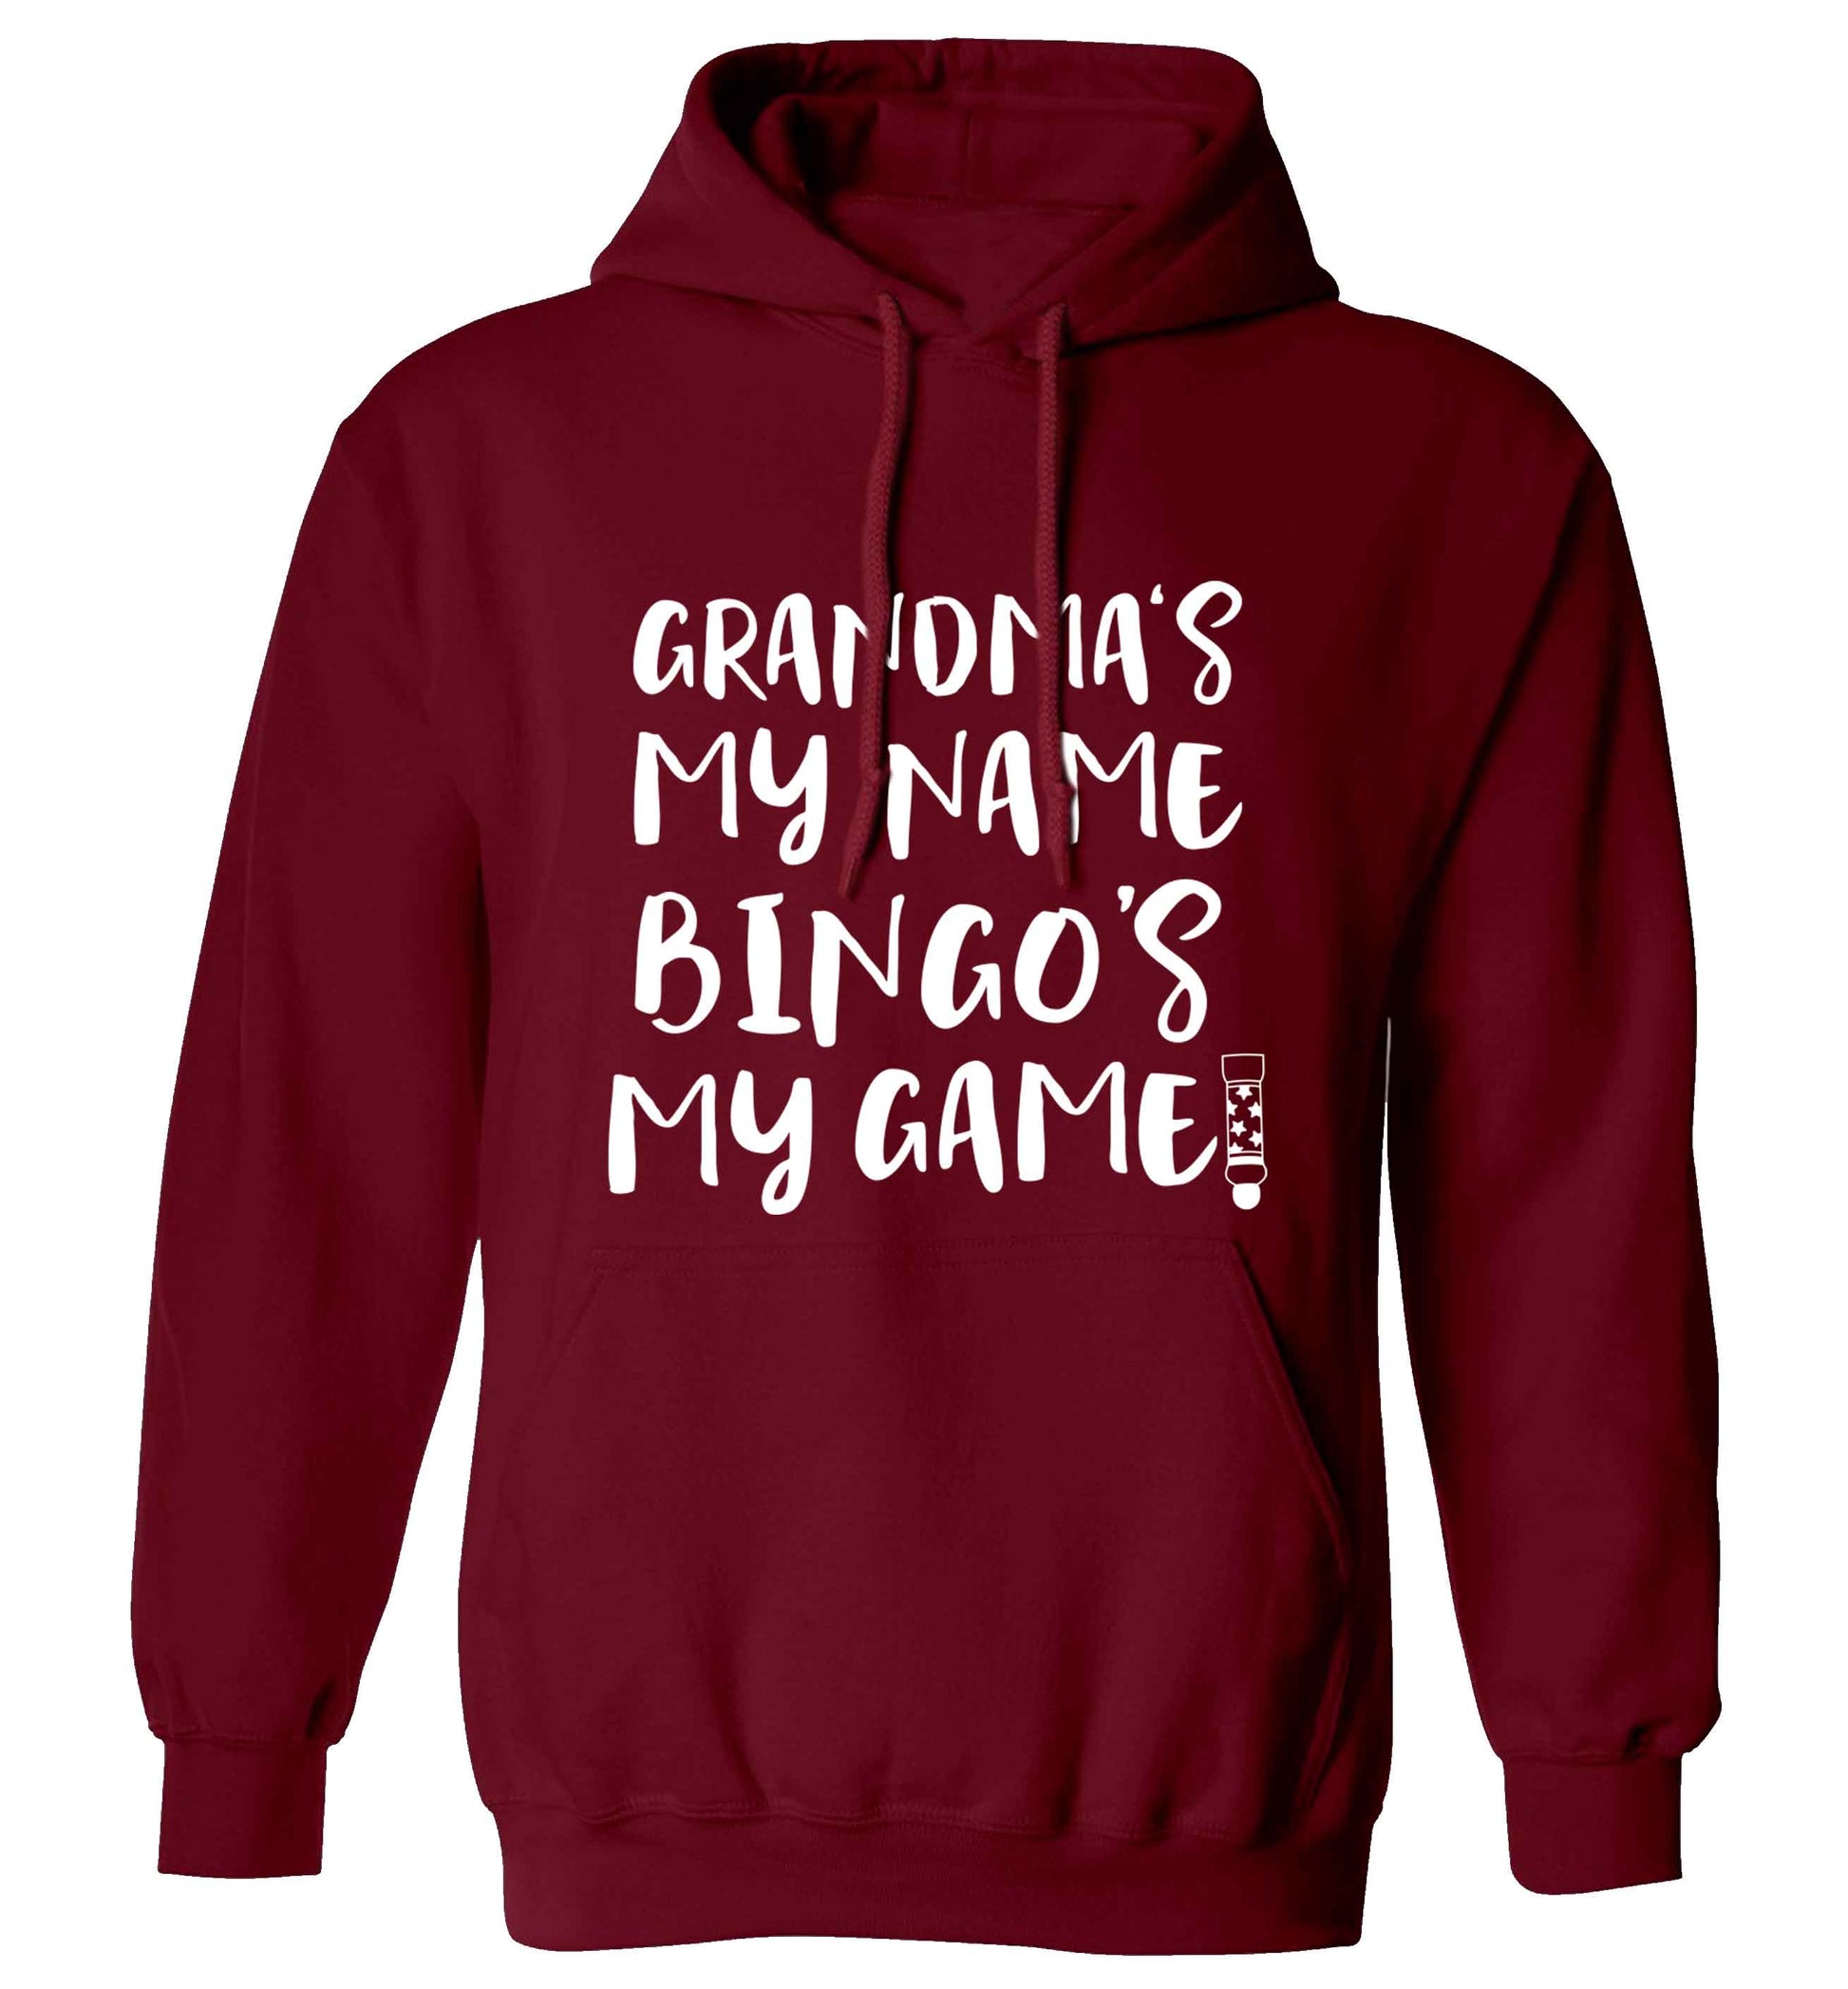 Grandma's my name bingo's my game! adults unisex maroon hoodie 2XL